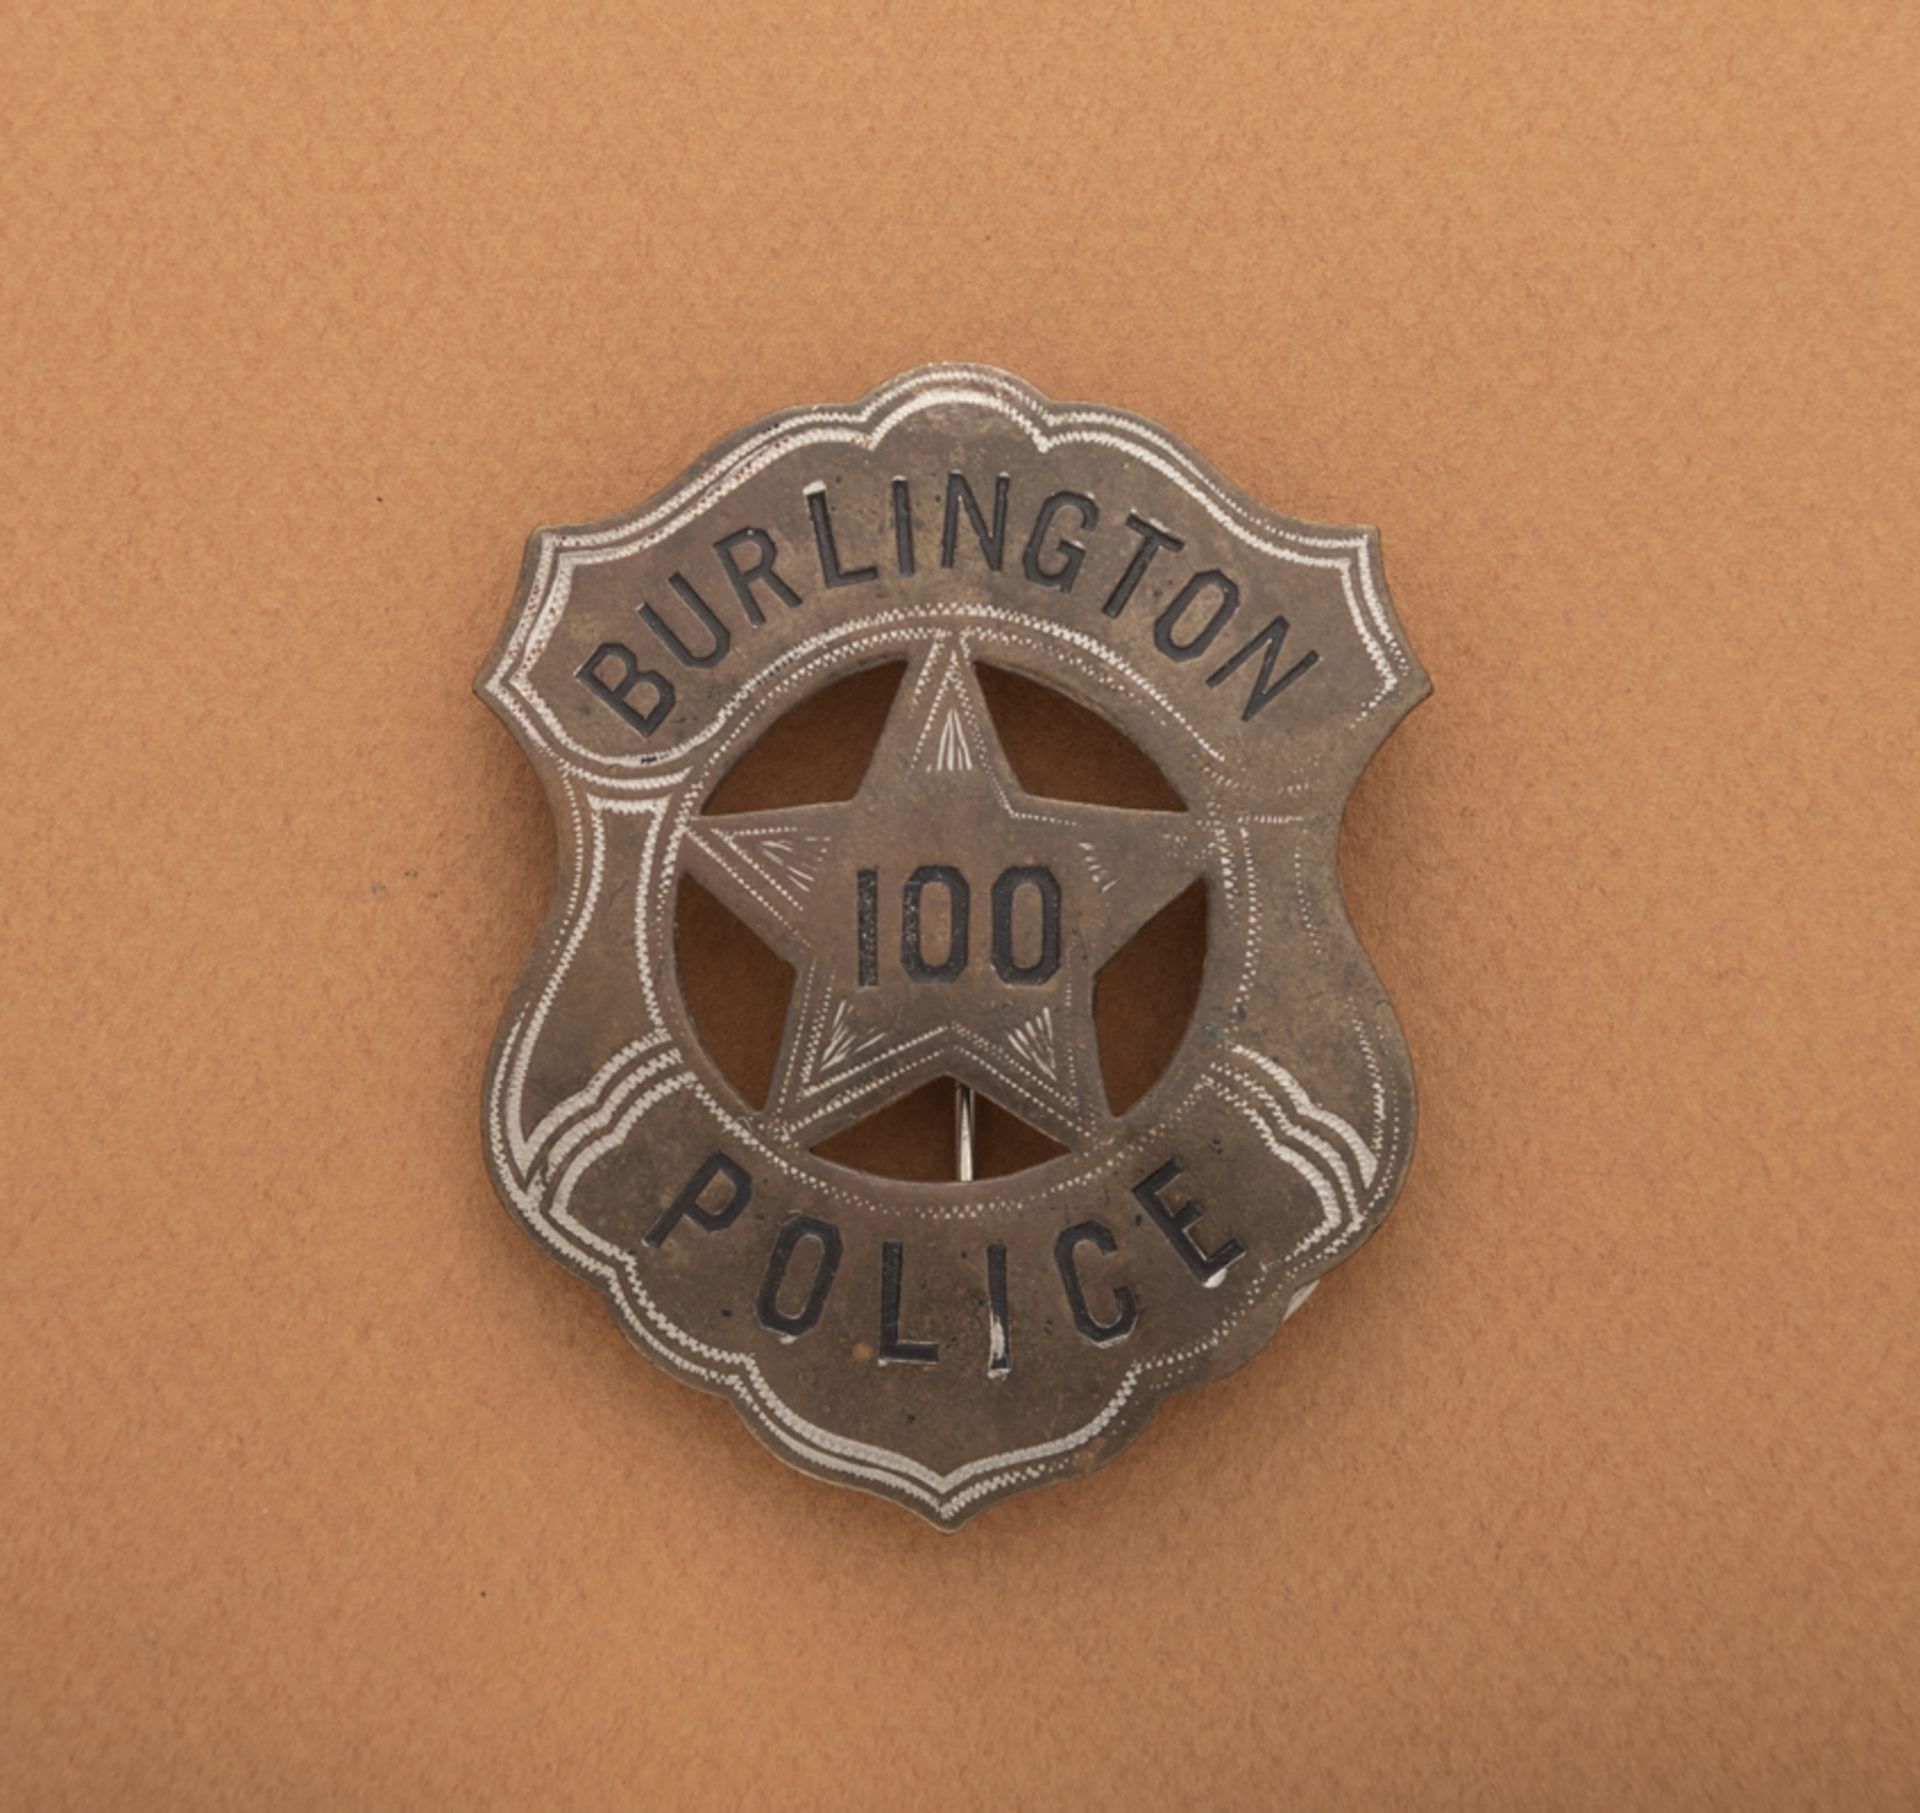 Burlington Police 100 Shield Badge, 2 3/4" tall, shield with cut out star. Hallmark "C.D. Reese / Ne